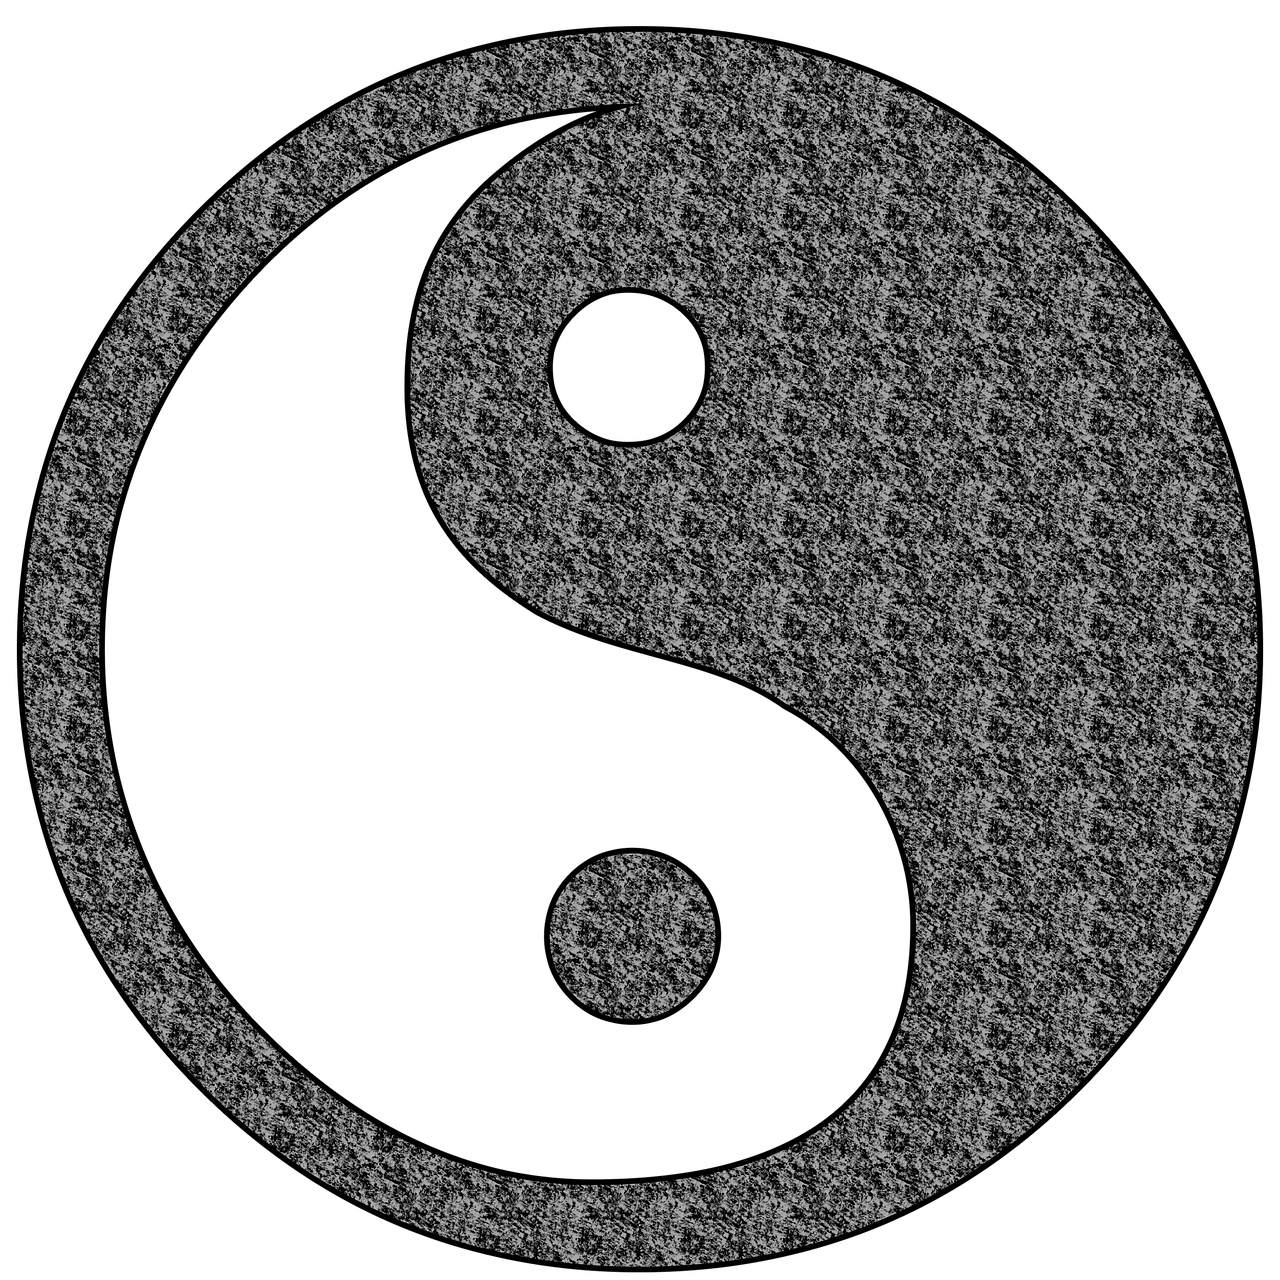 Black and white symbol harmony balance Royalty Free Vector